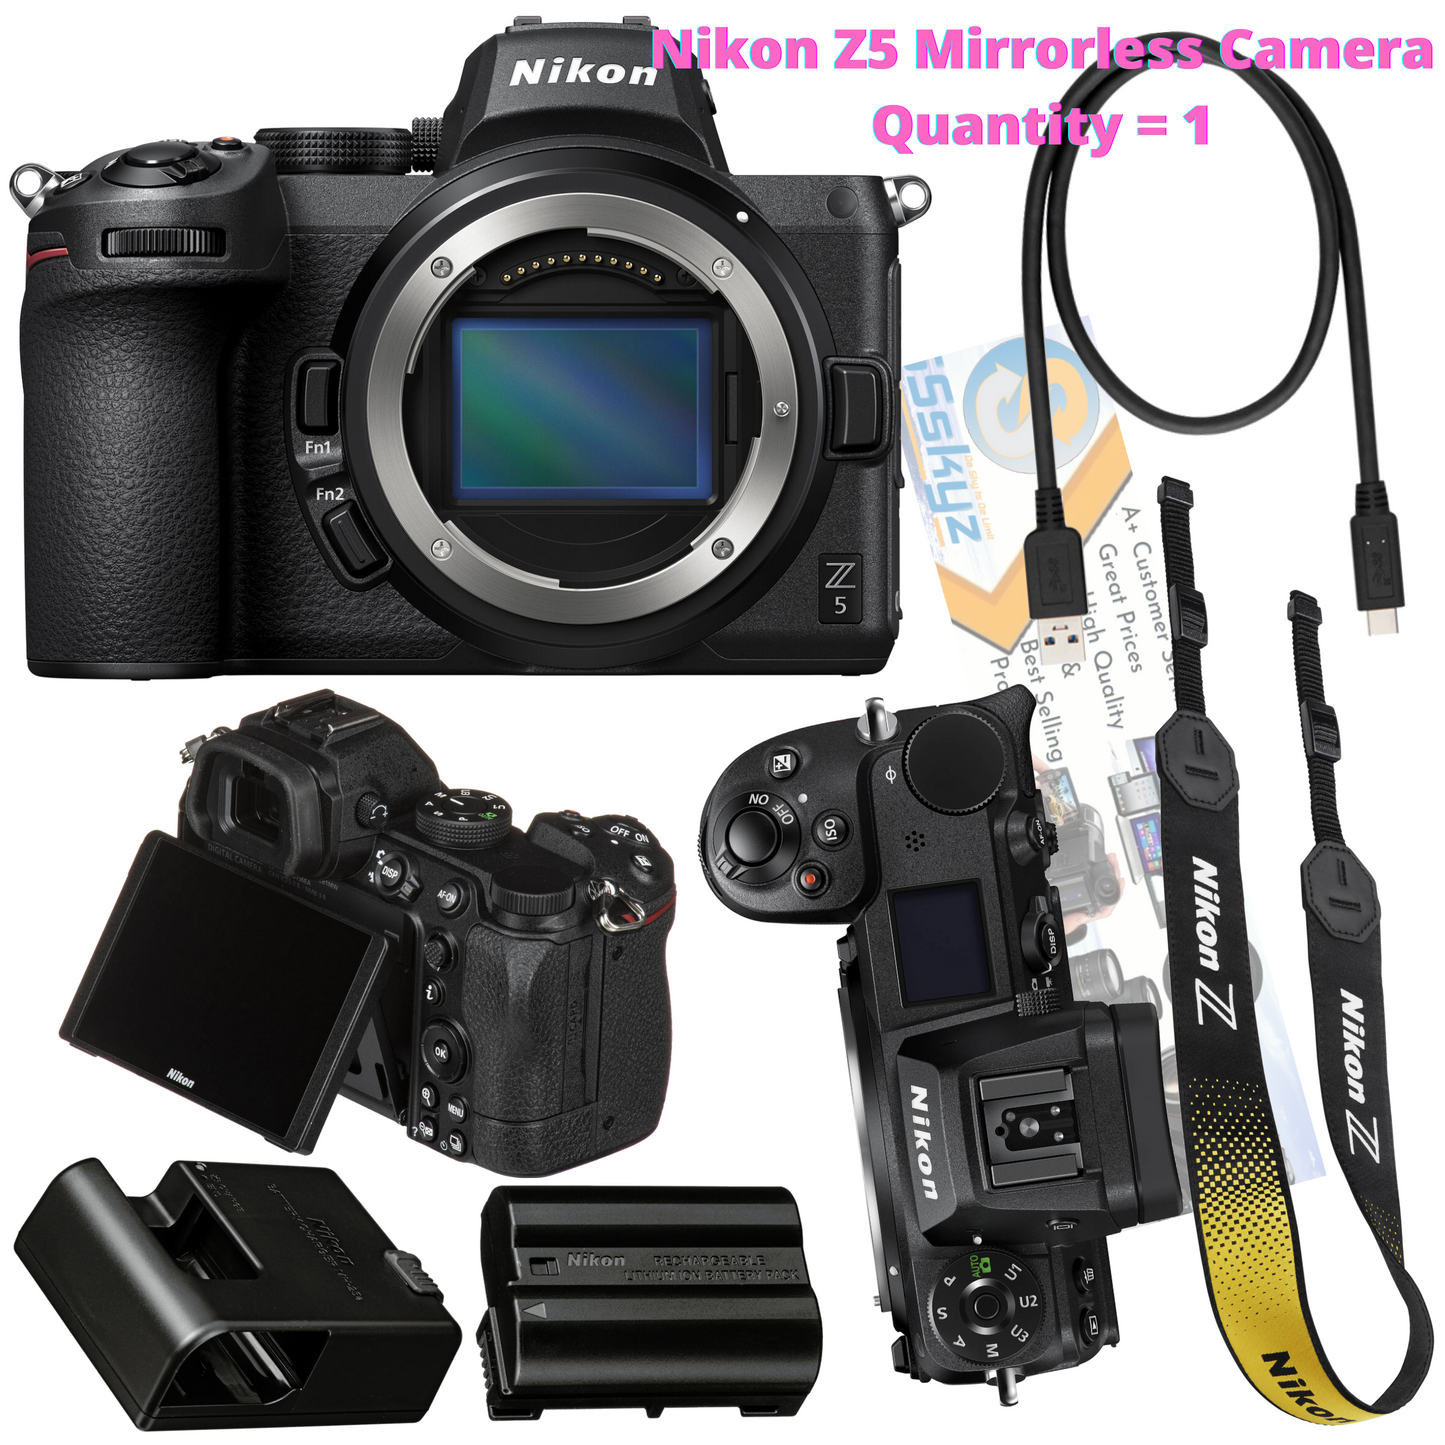 Nikon Camera Mirrorless Z5 Mp 4K Bluetooth Z Uhd – SSskyz 1 Digital Wifi 24.3 5